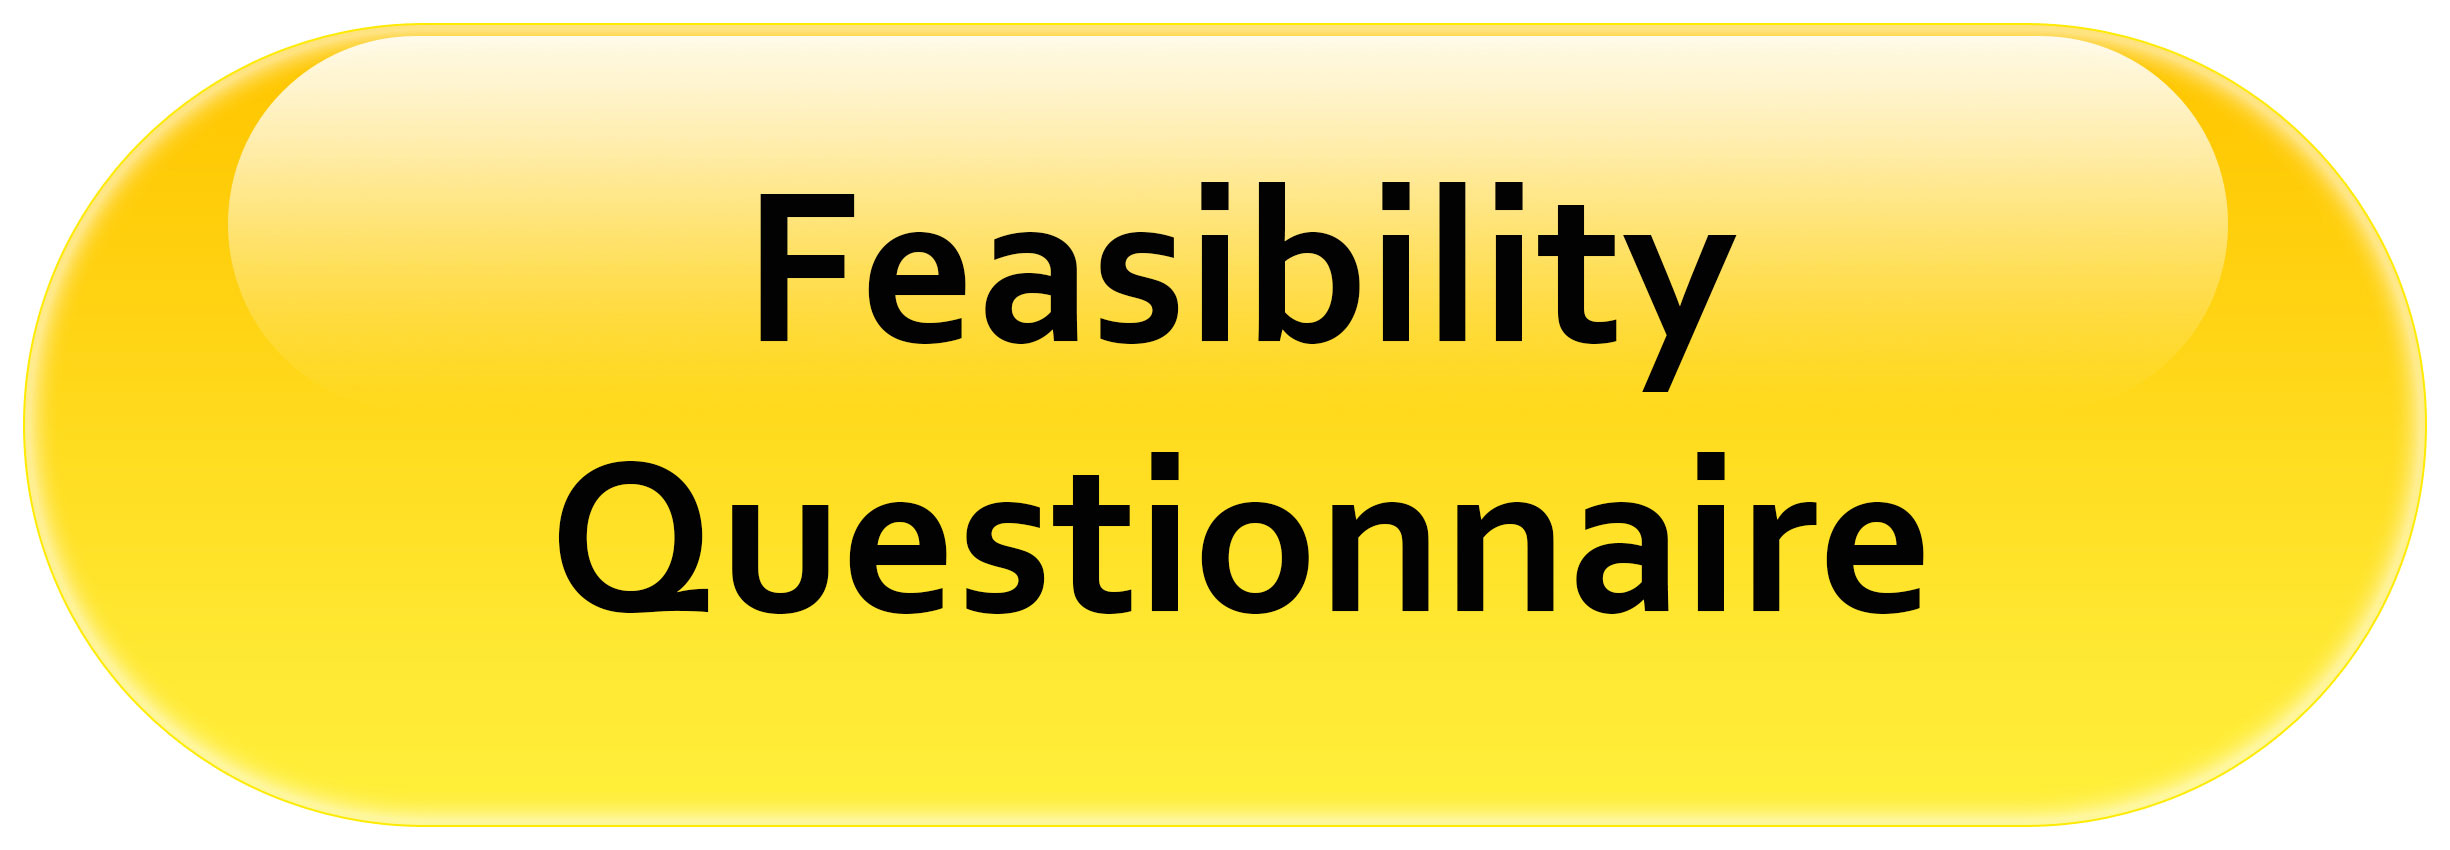 Feasibility Questionnaire Button